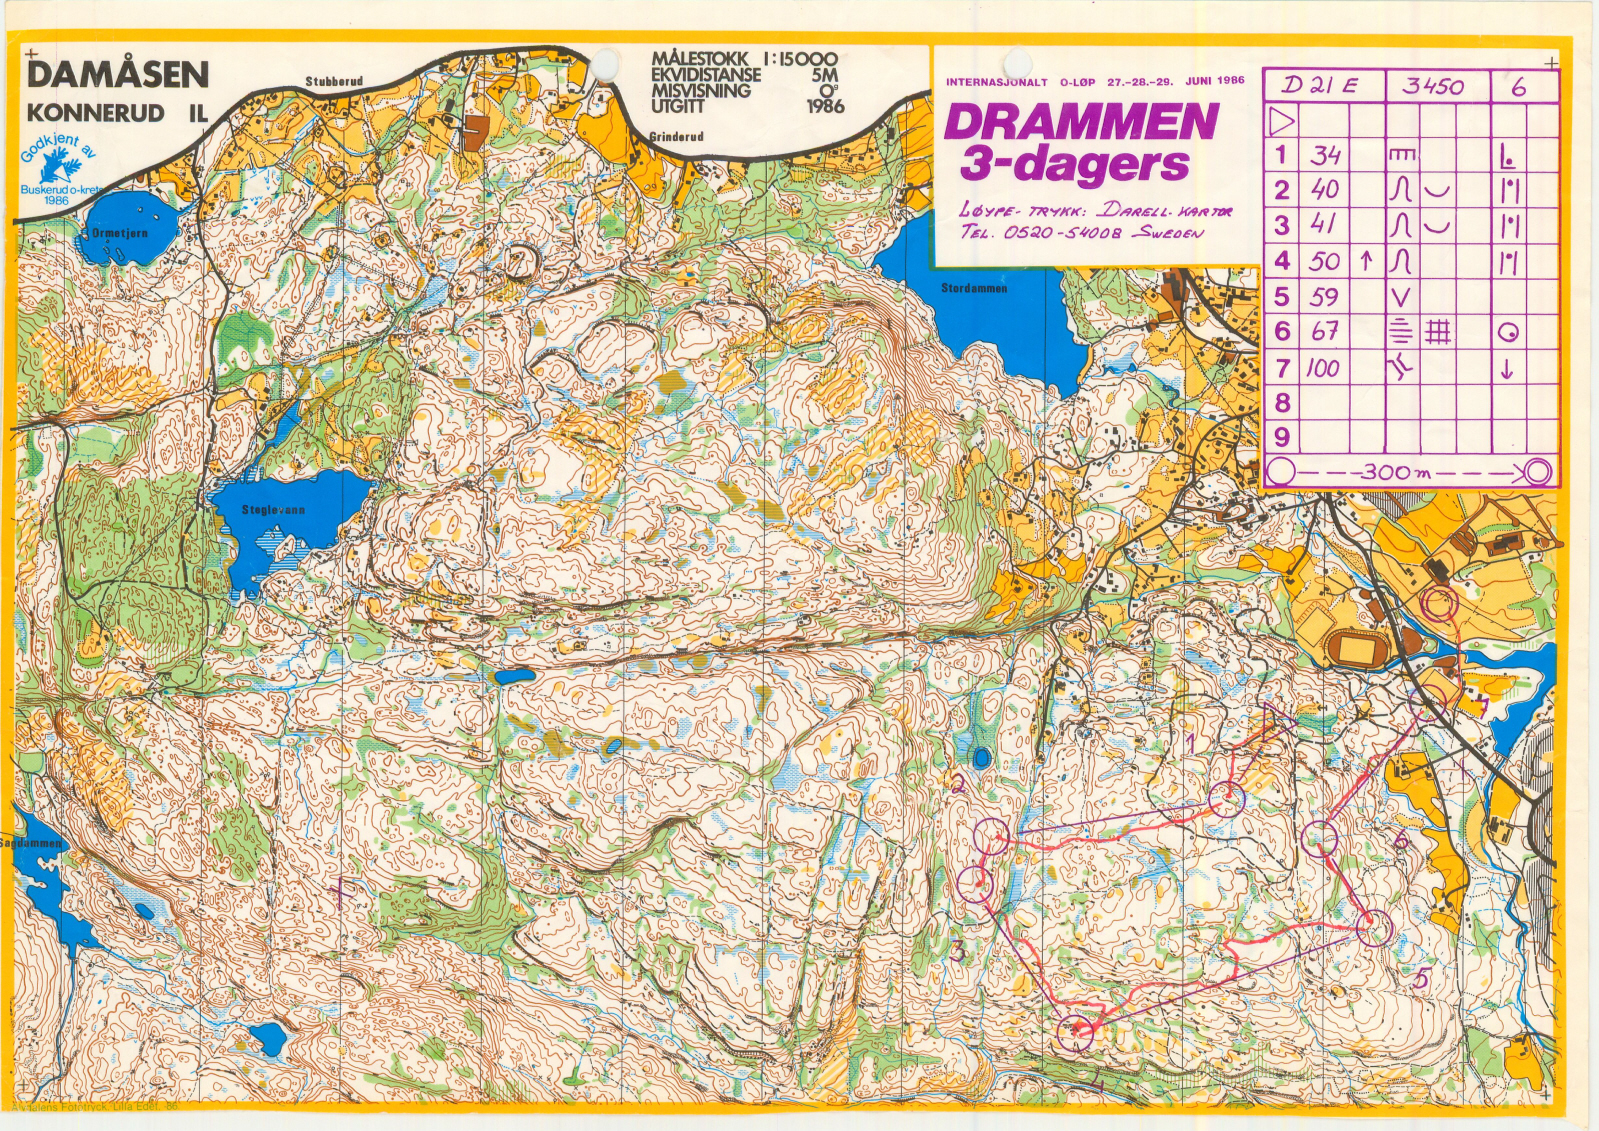 Drammen 3-dagers etappe 1 (27/06/1986)